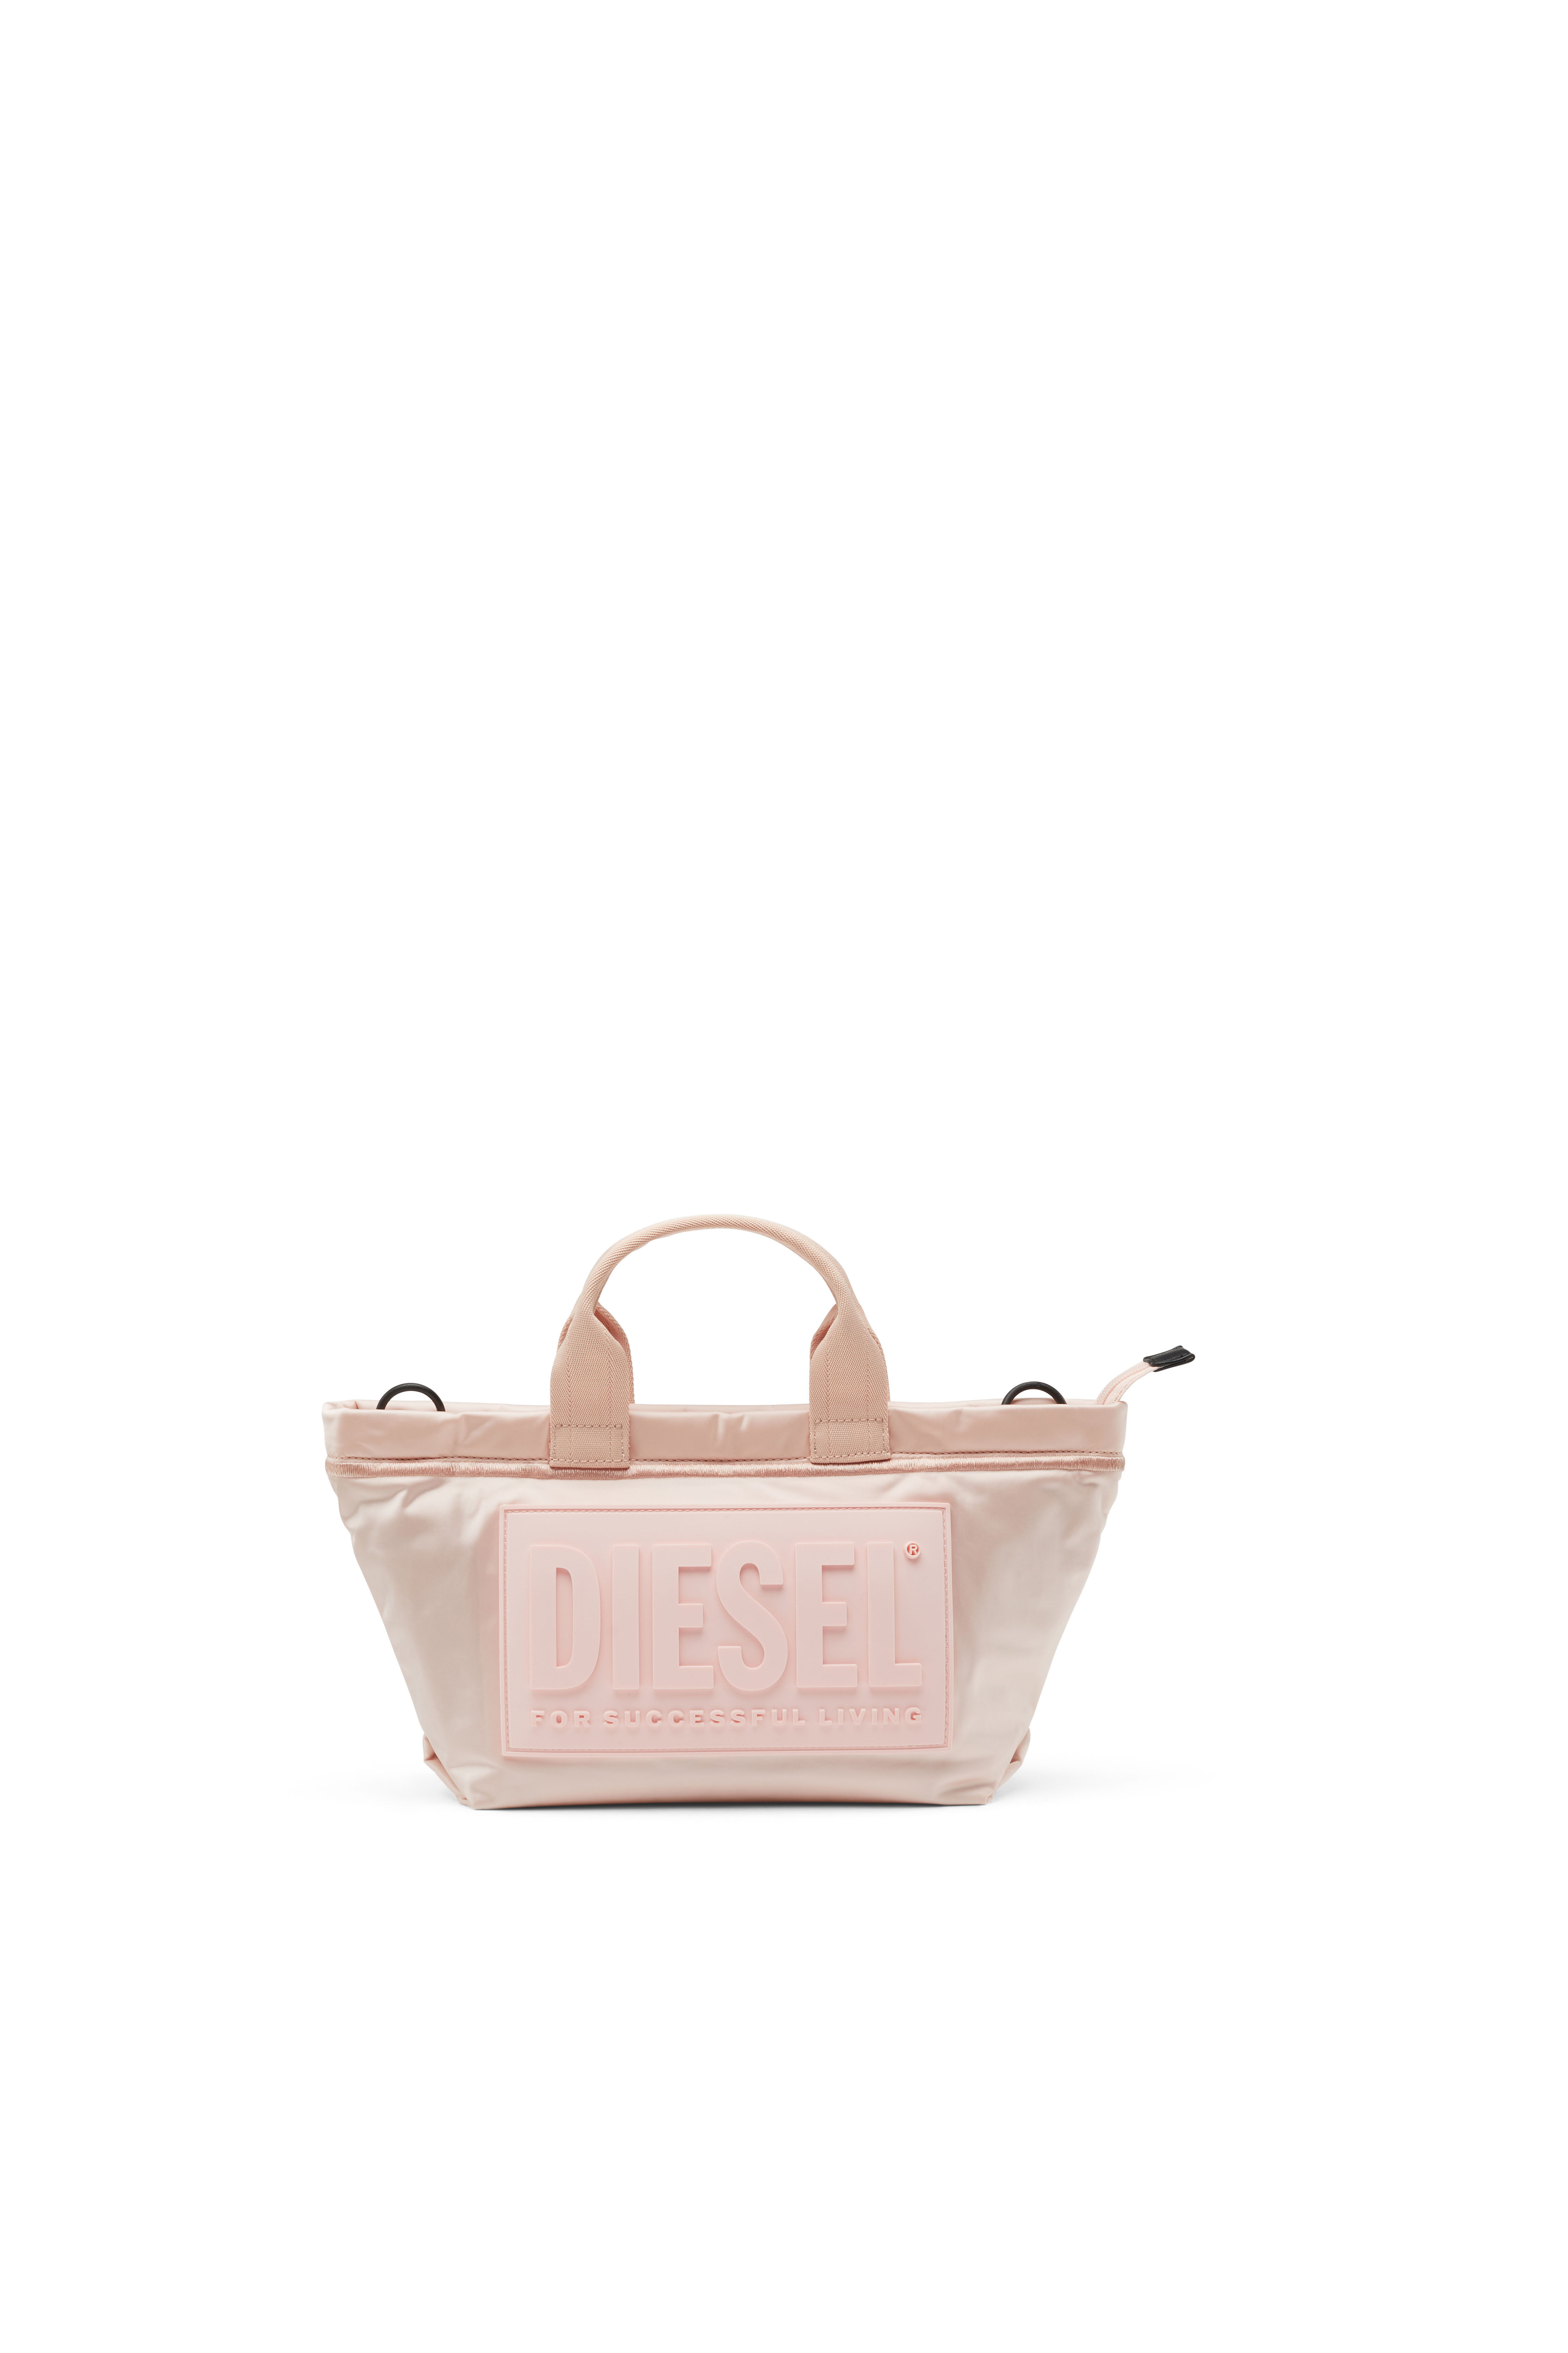 Diesel - HANDYE, ピンク / ホワイト - Image 2